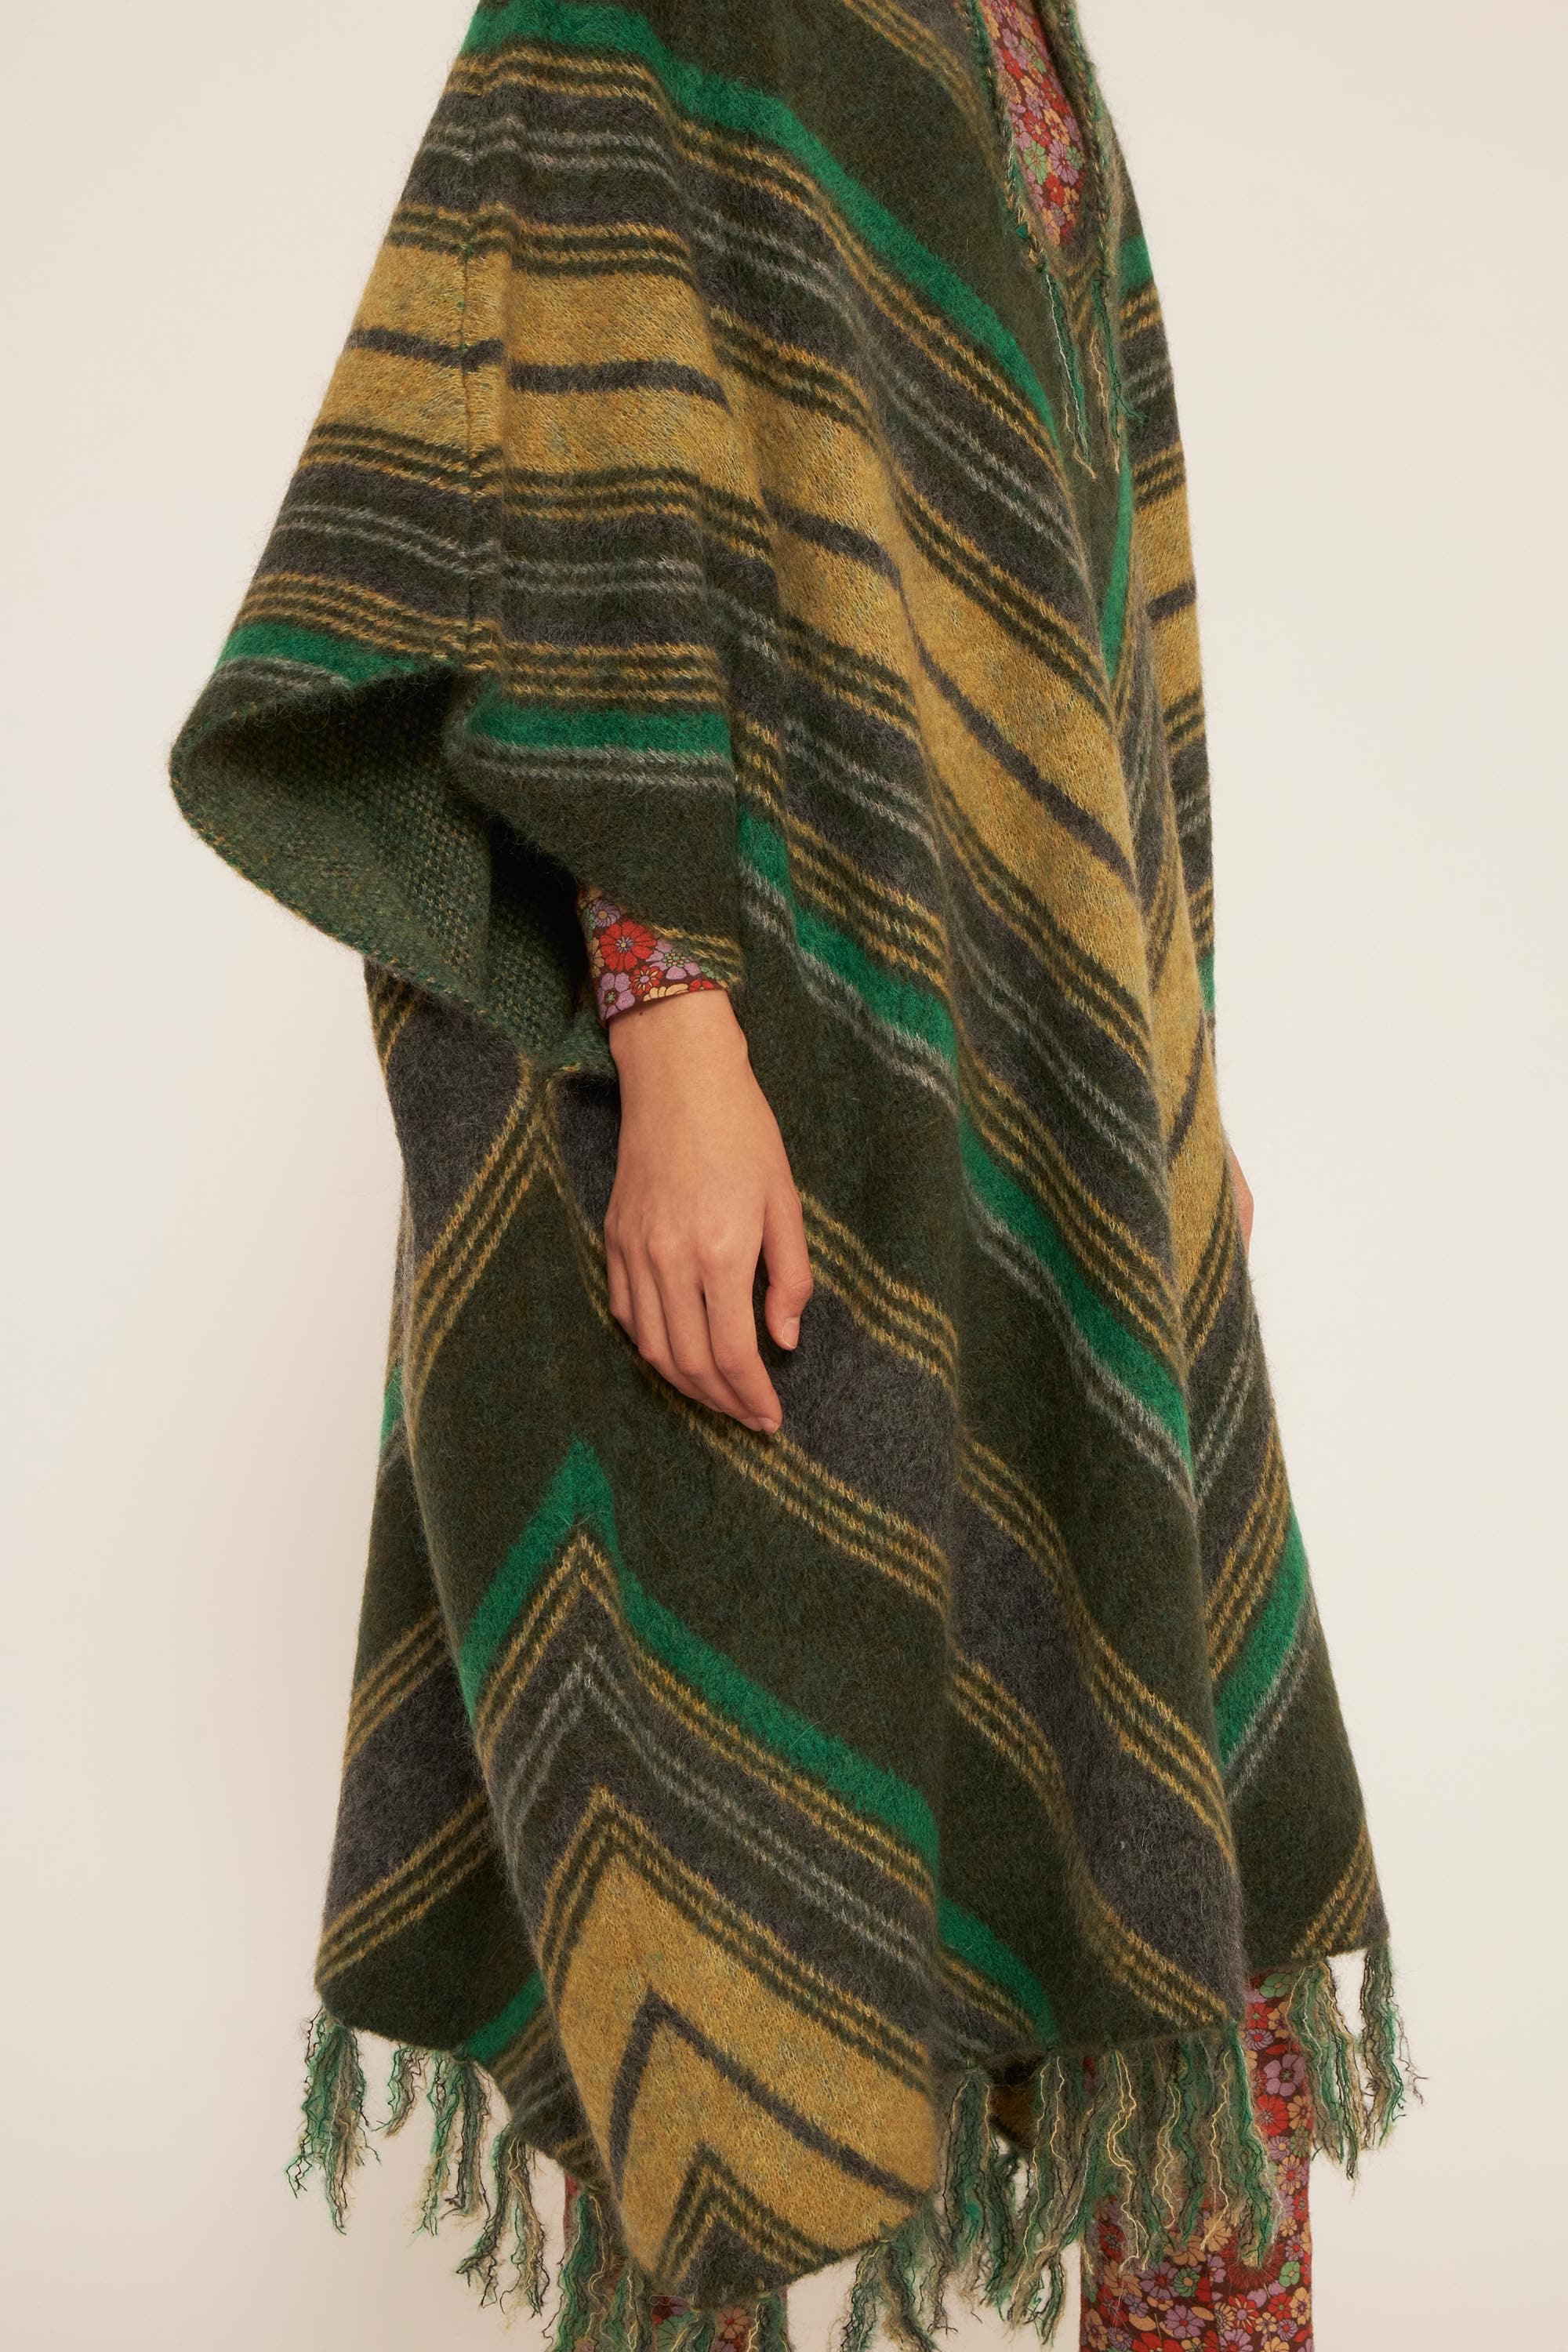 Poncho de doble capa en mohair con rayas en tonos verdes y gran escote: 700 euros en Antik Batik.